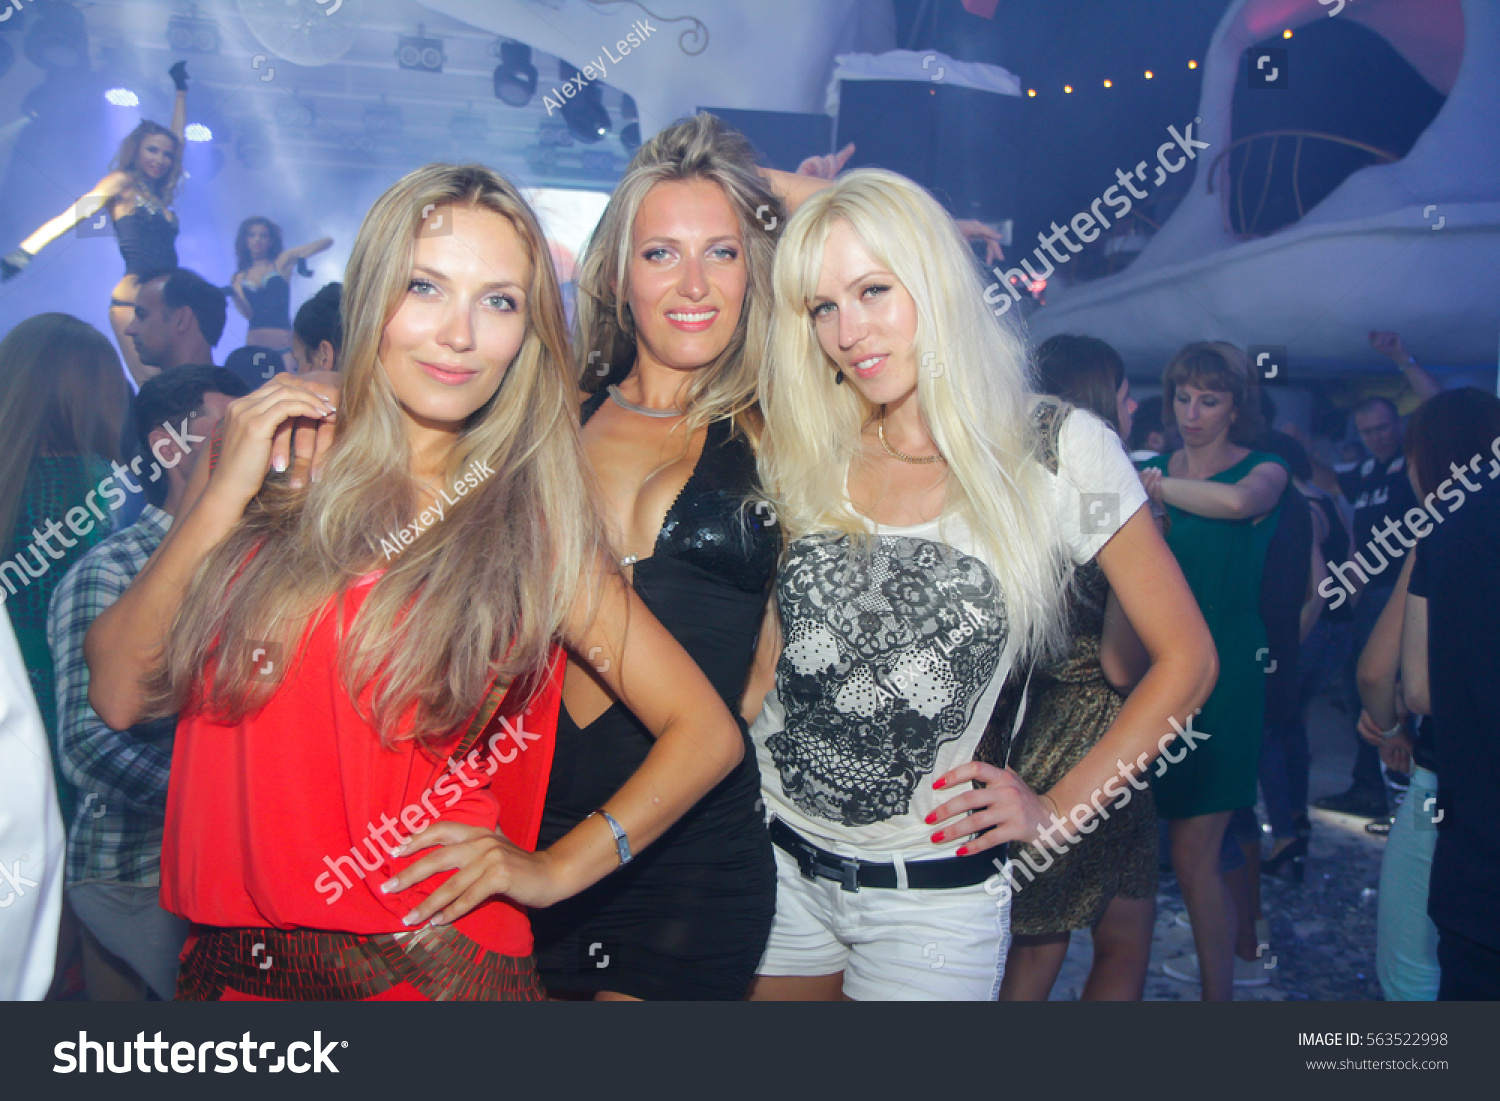 Club ukraine night Strip Clubs,